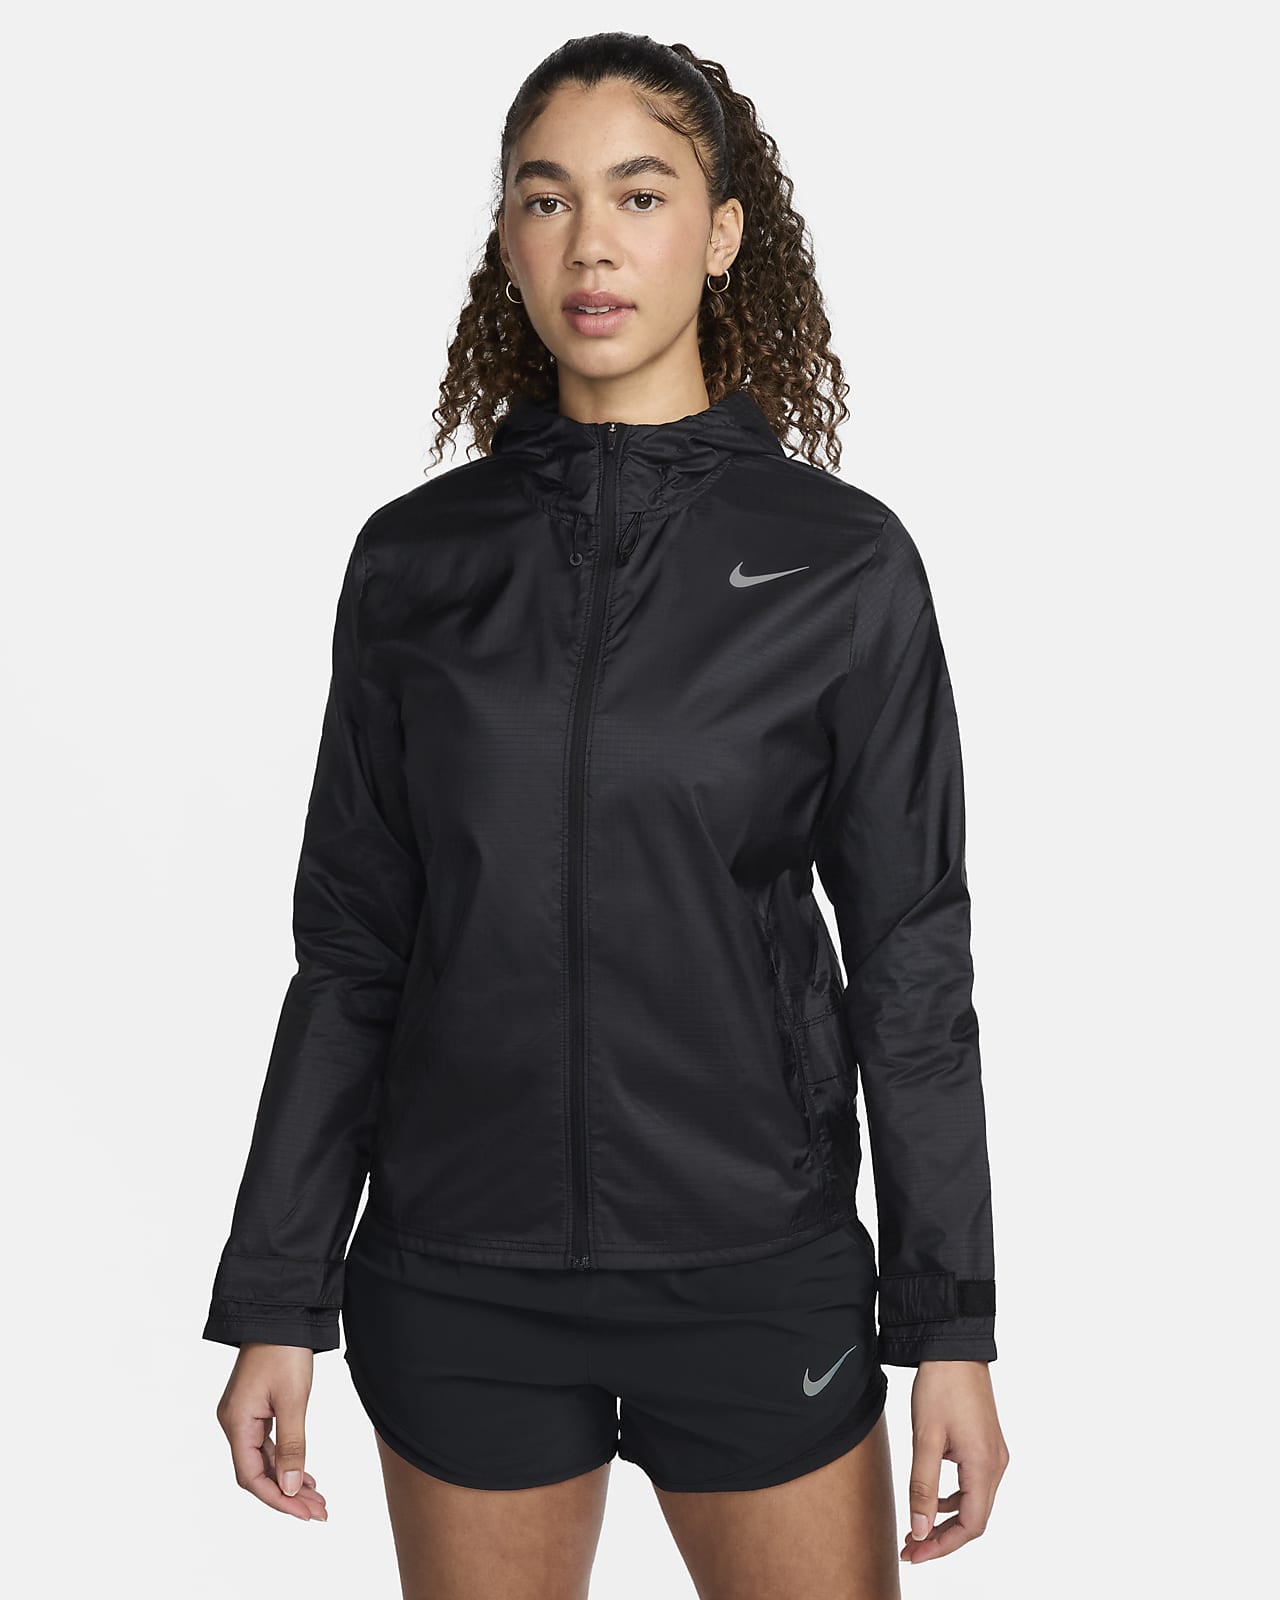 Veste de running Nike Essential pour Femme